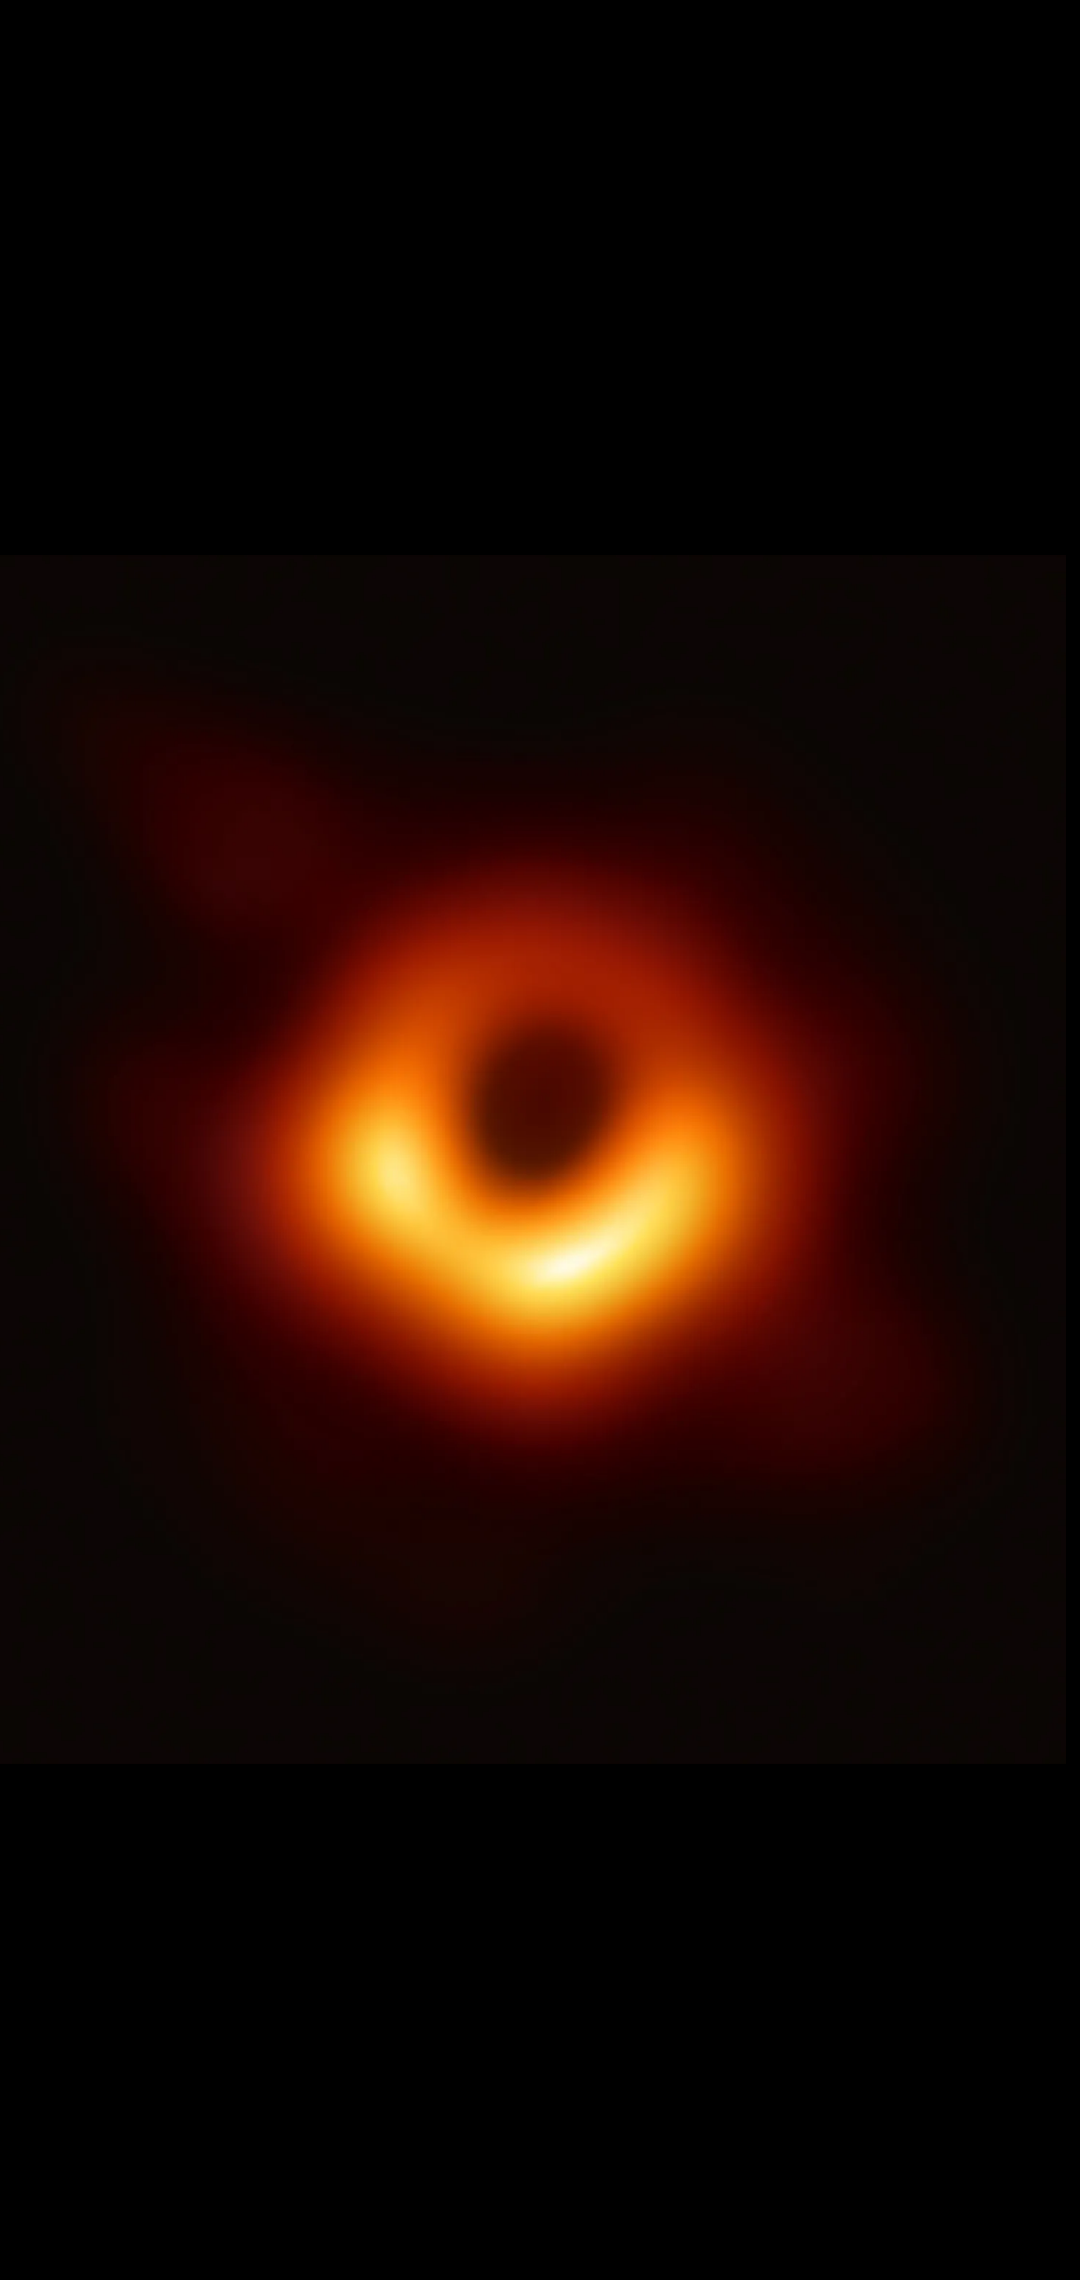 Event Horizon Telescope Black Hole. iPhone X